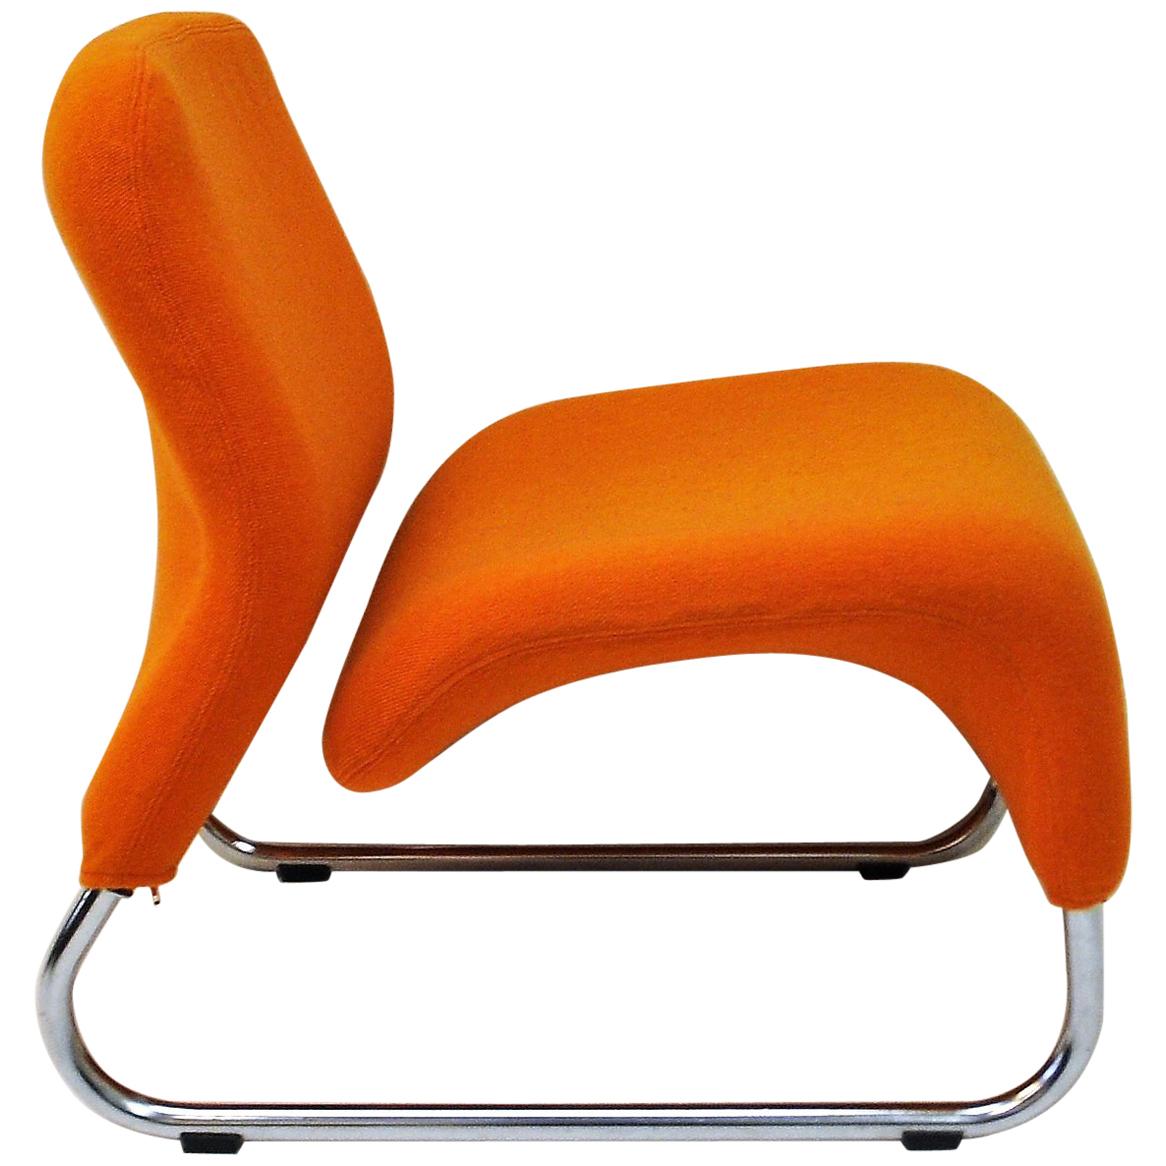 Orange Lounge Chair Ecco by Møre Design Team 1970, Norway